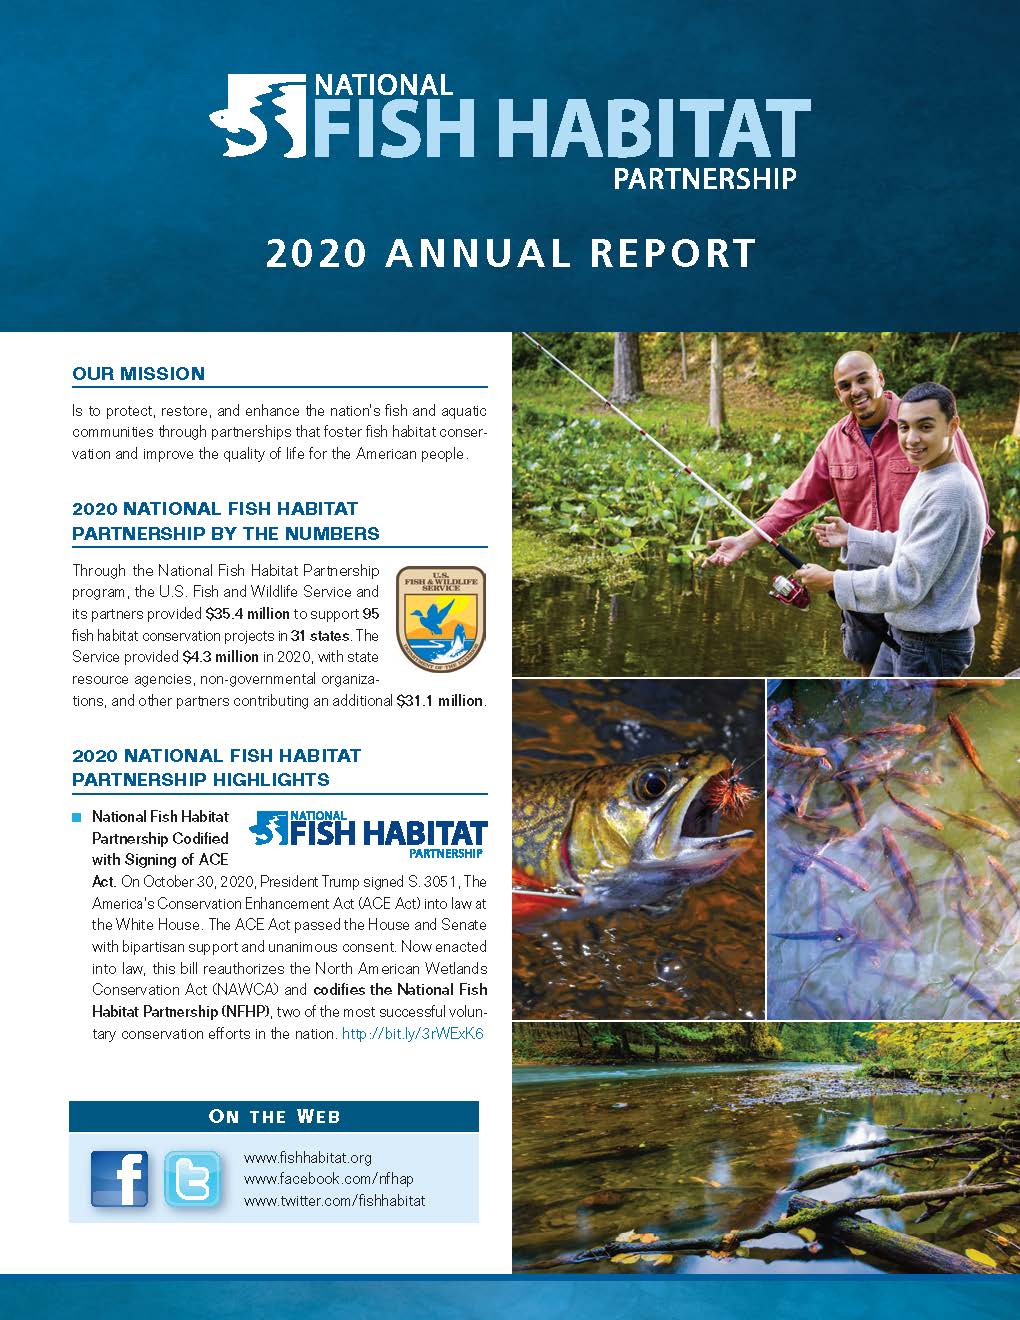 National Fish Habitat Partnership Releases 2020 Annual Report